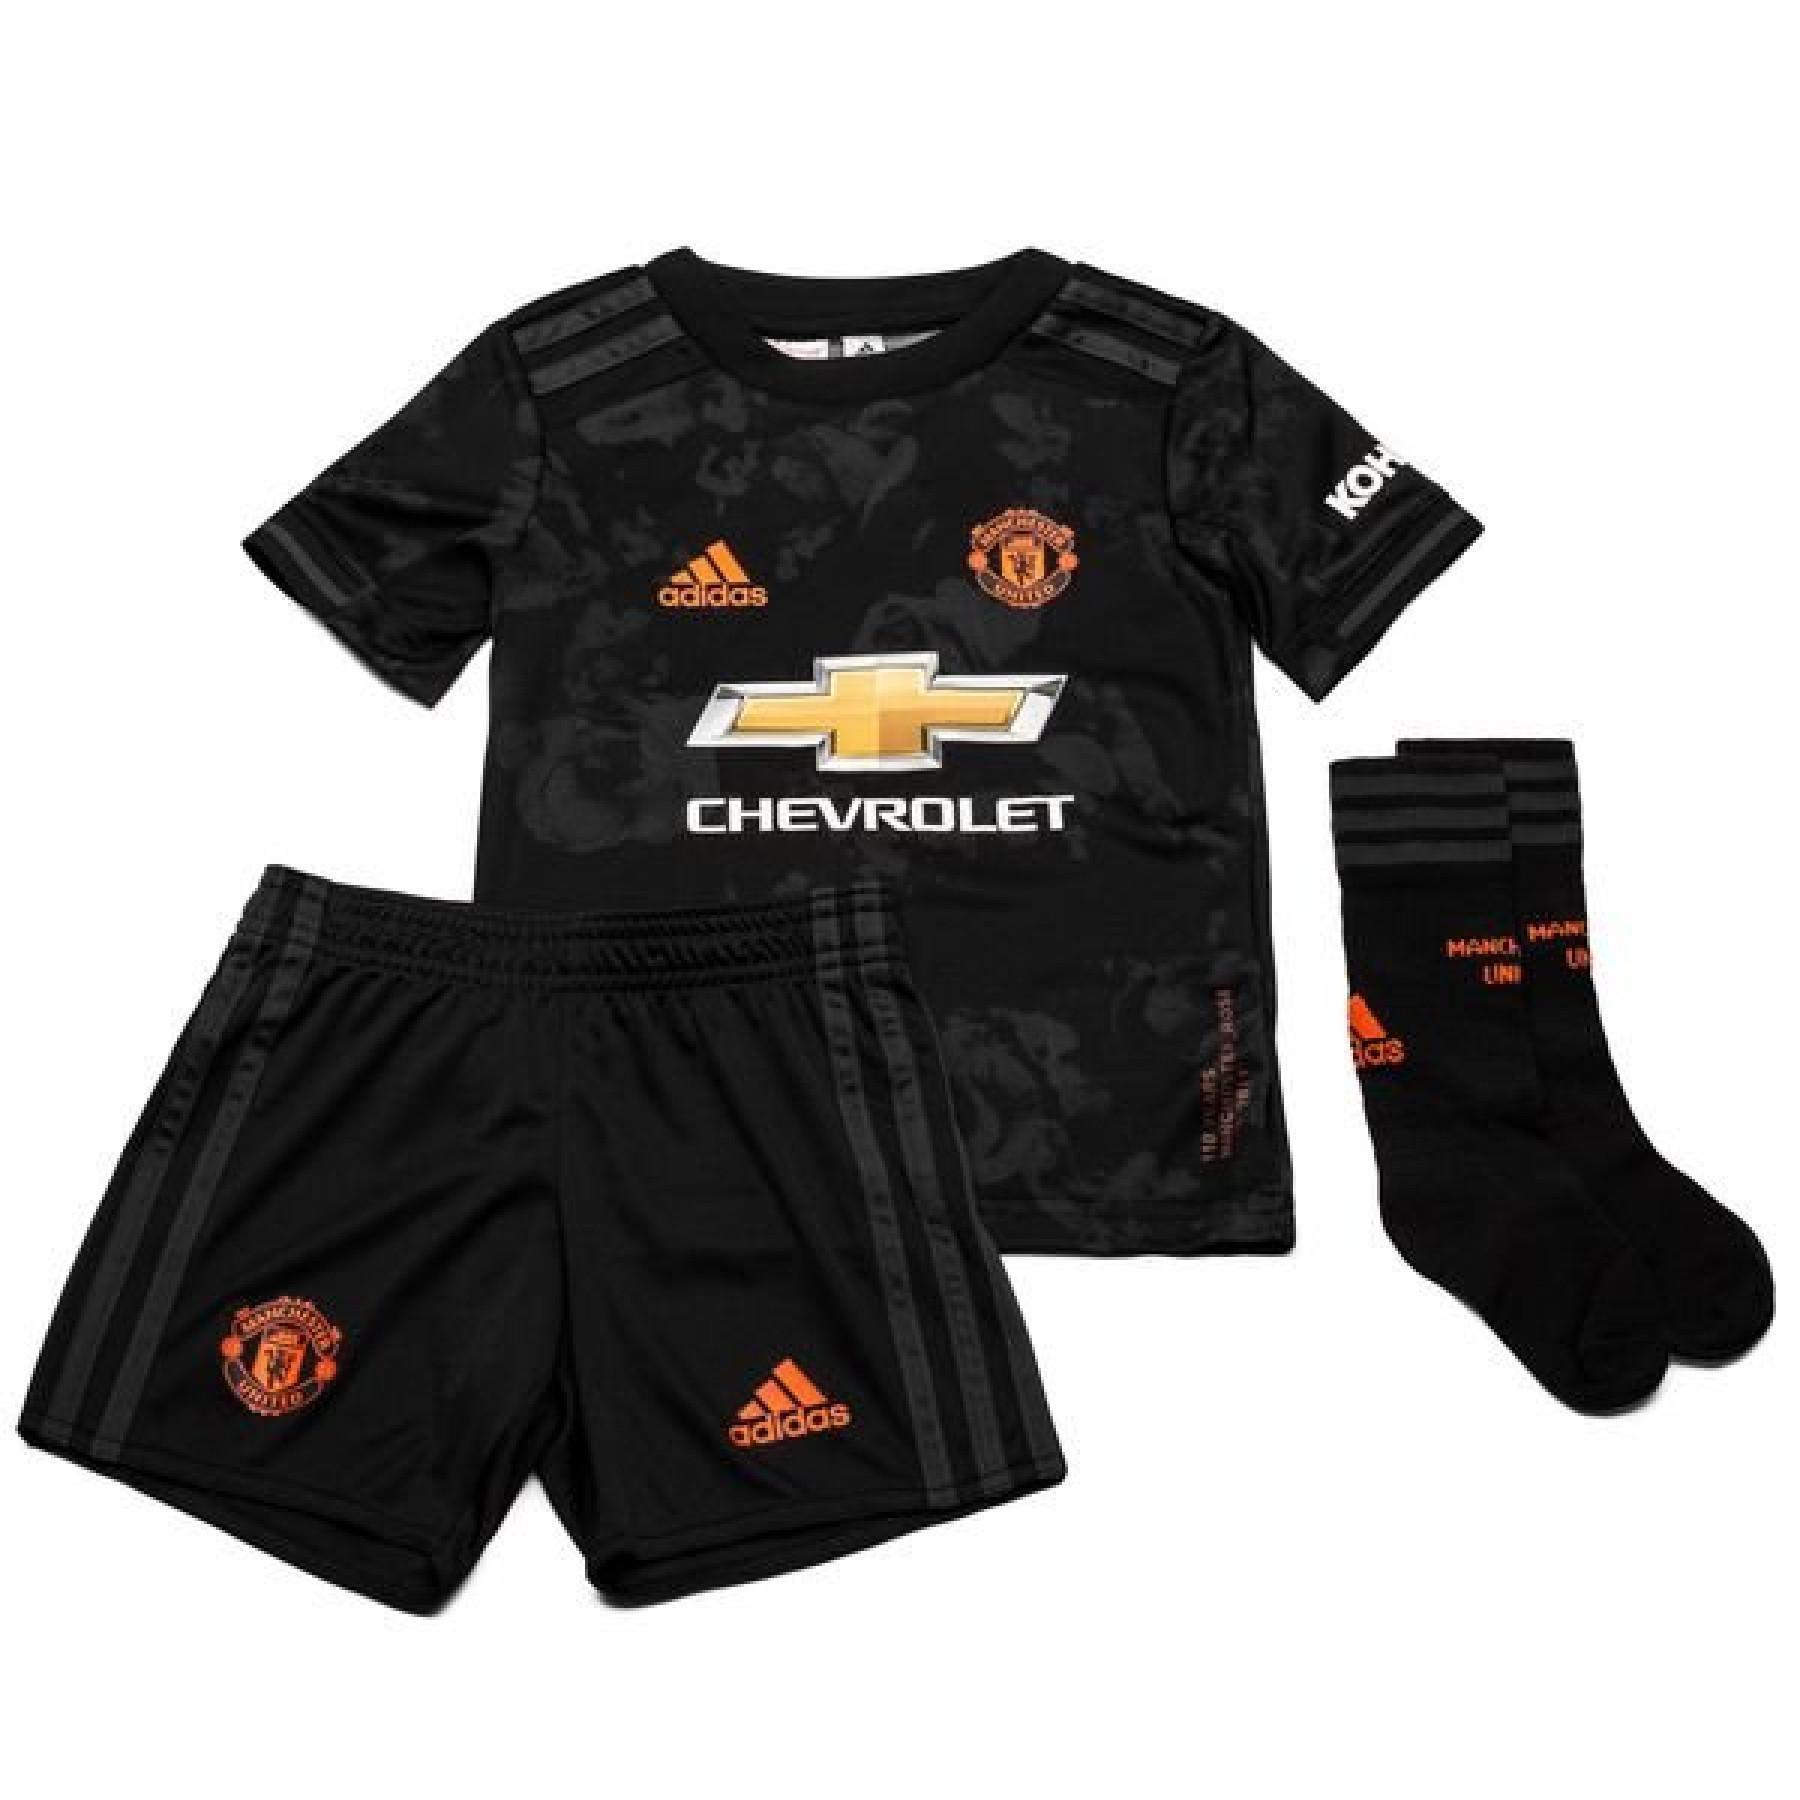 Mini-kit derde Manchester United 2019/20